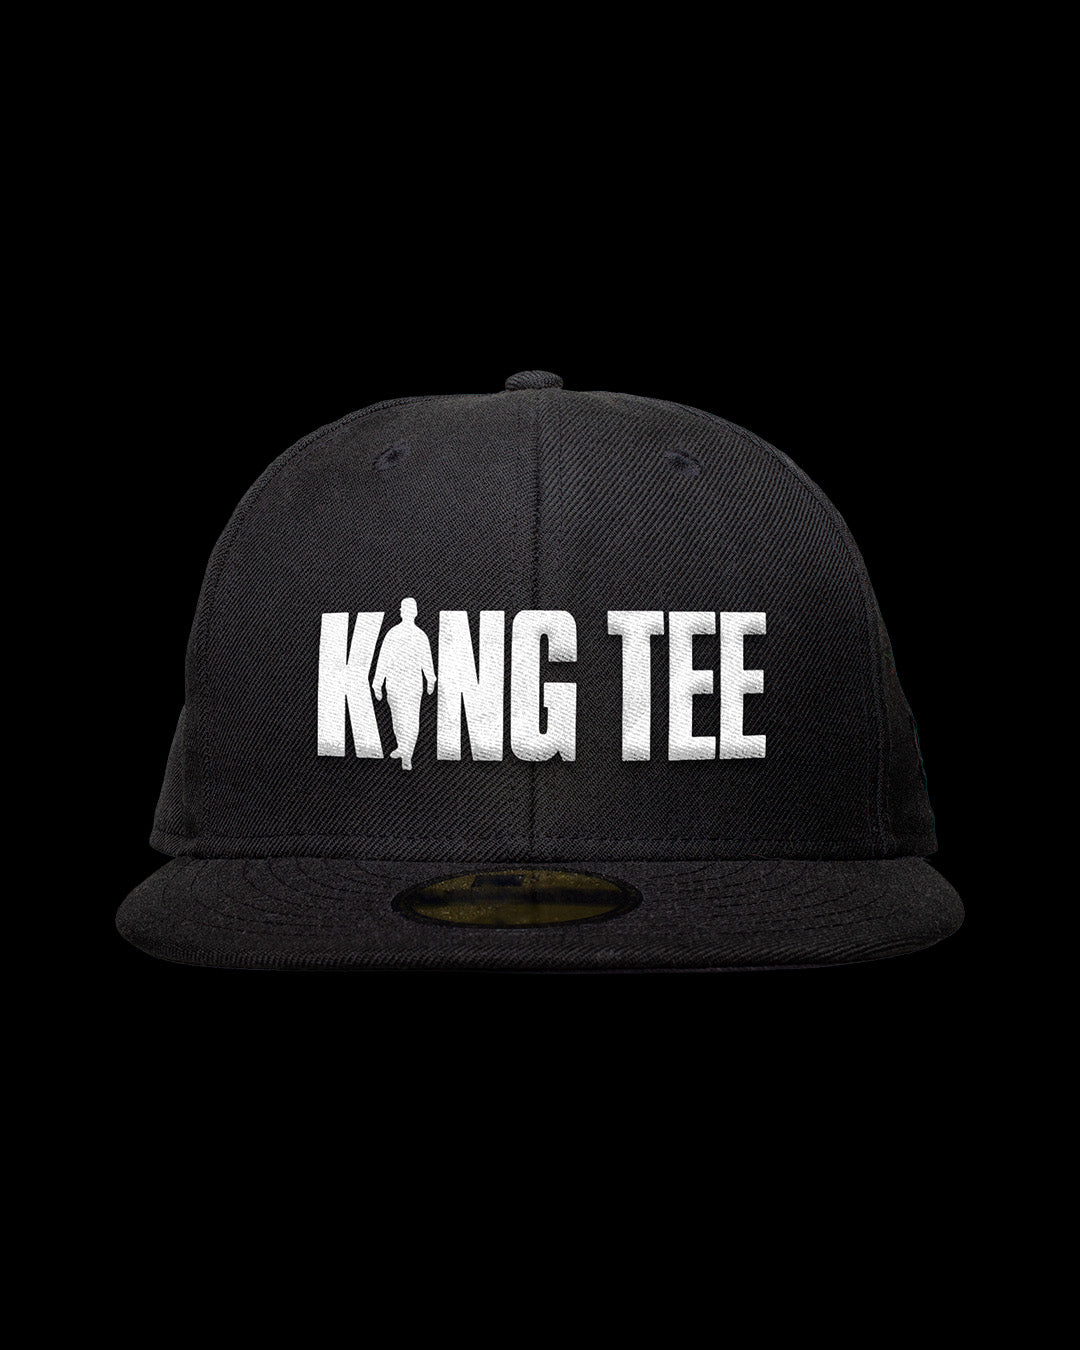 King Tee - Thy Kingdom Come (baseball cap)